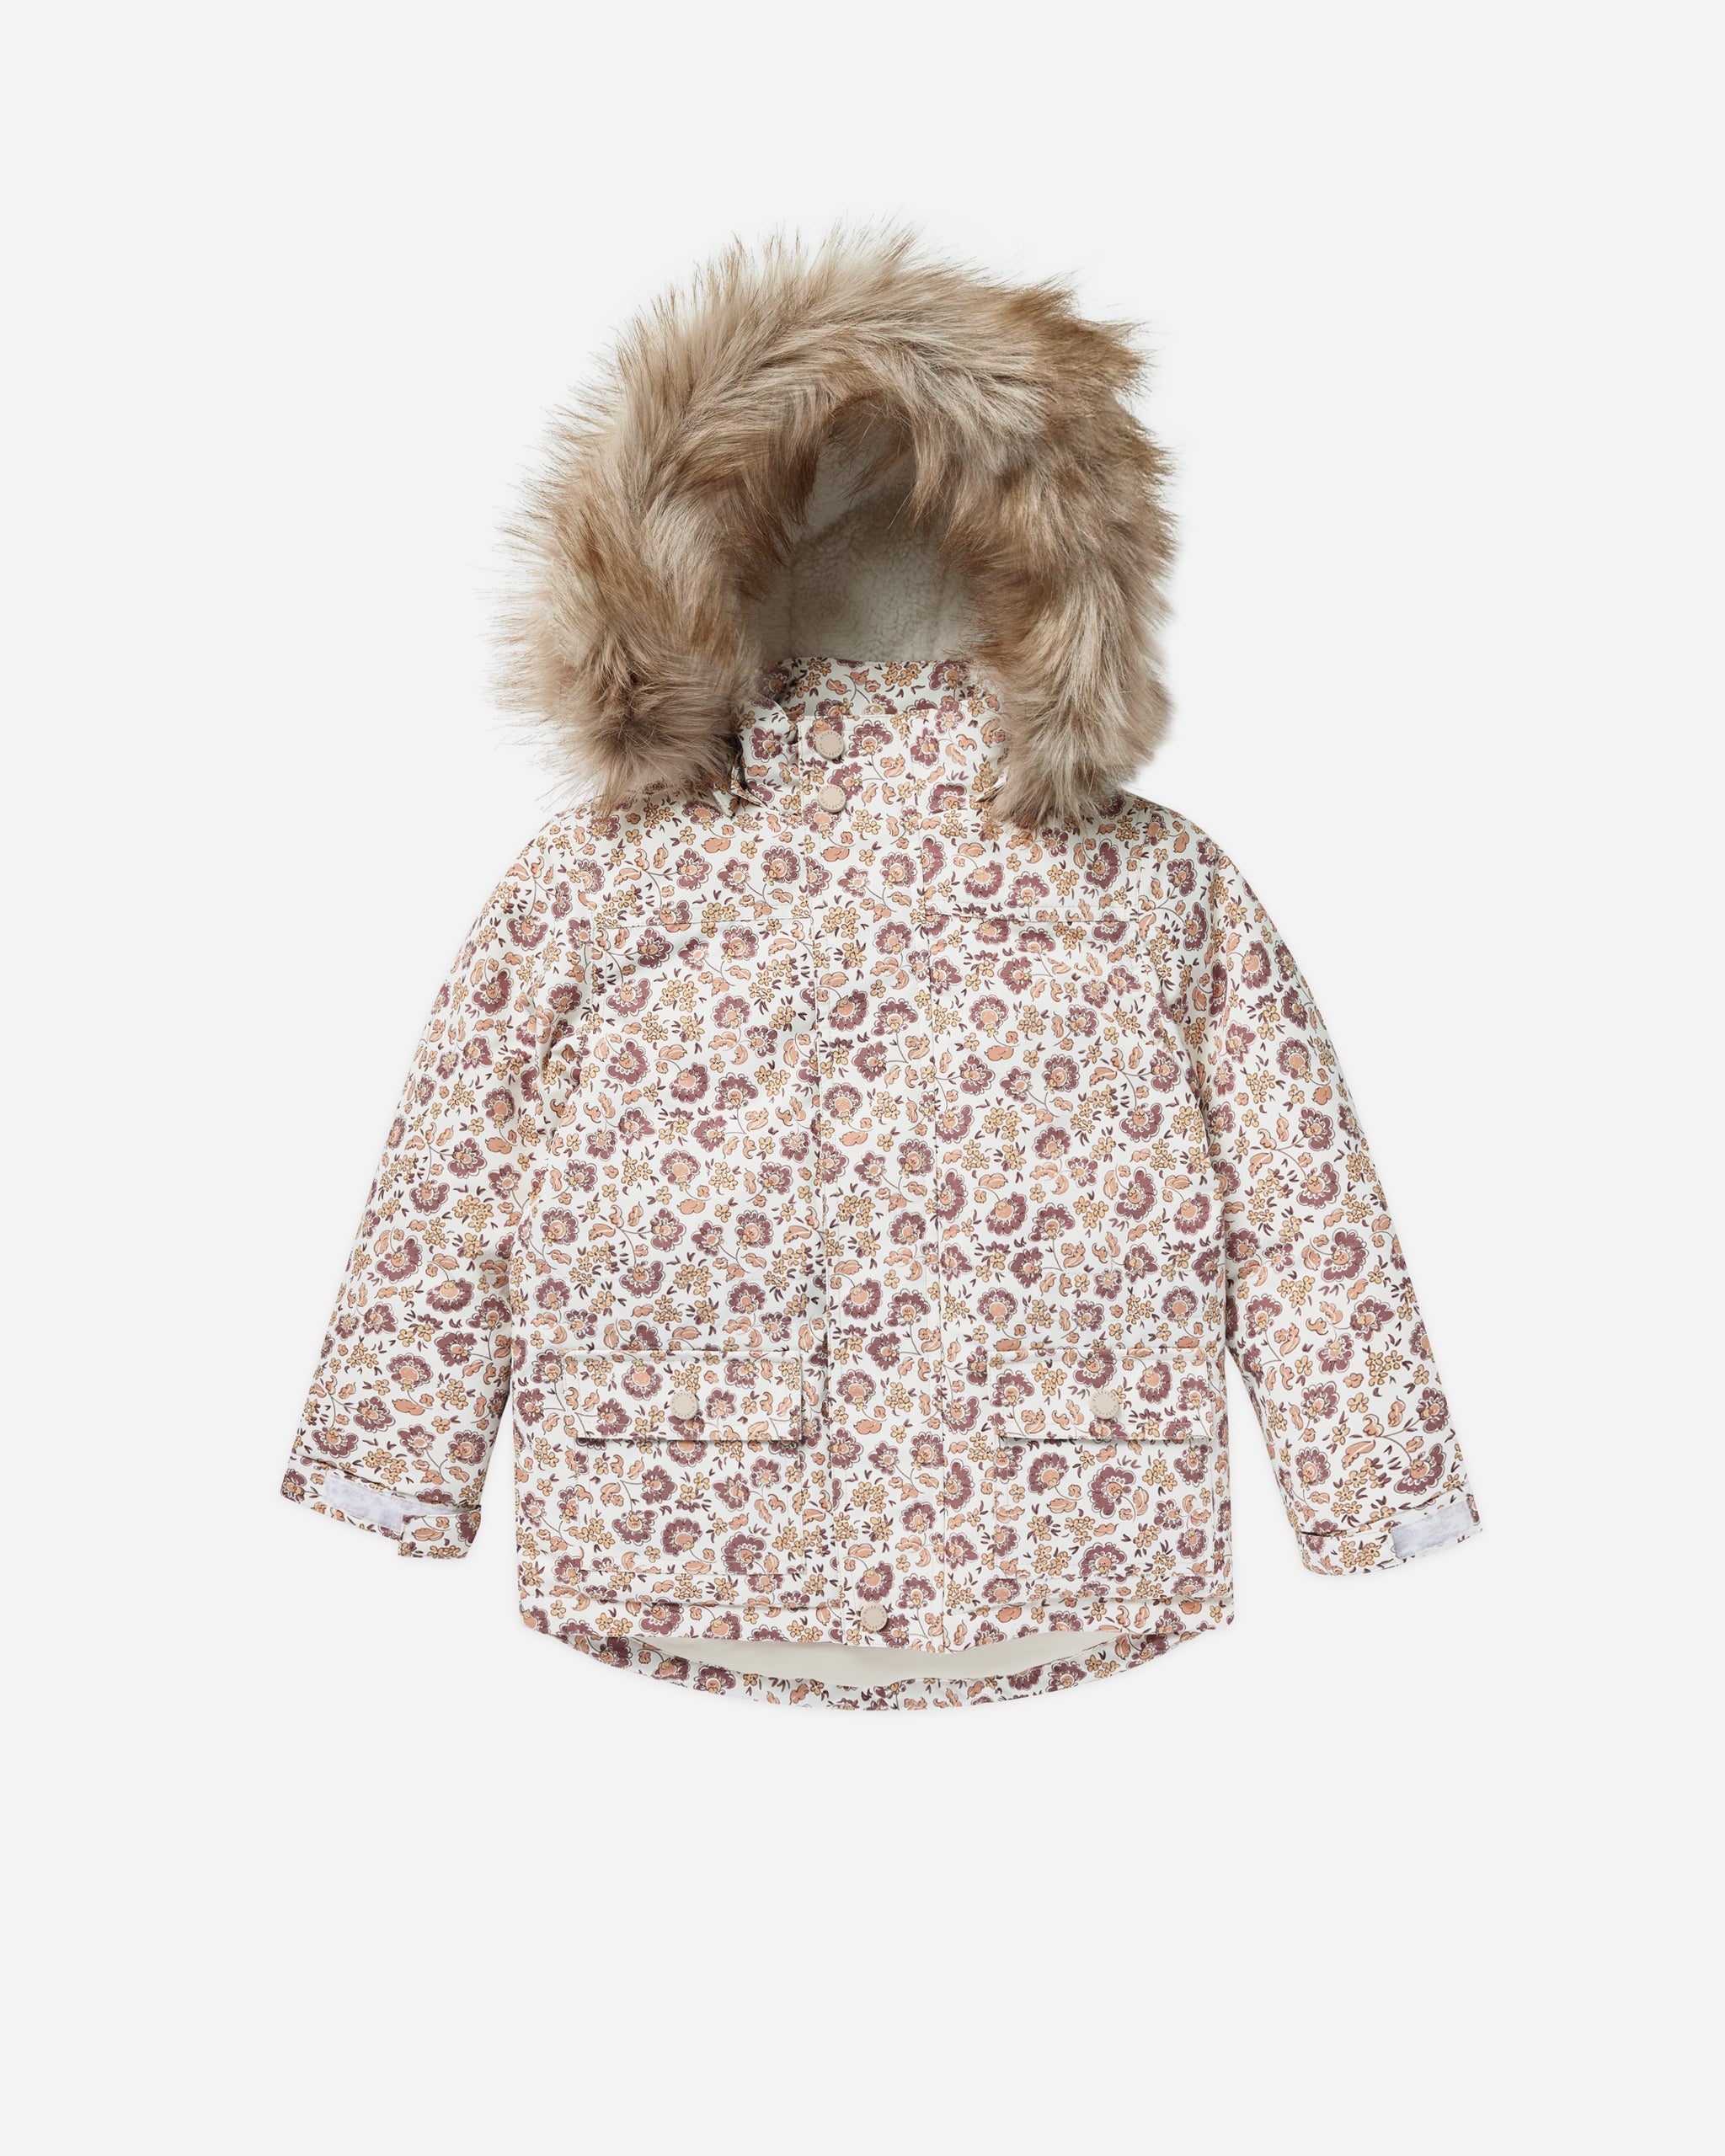 Parka Ski Jacket | Magnolia - Rylee + Cru | Kids Clothes | Trendy Baby Clothes | Modern Infant Outfits |